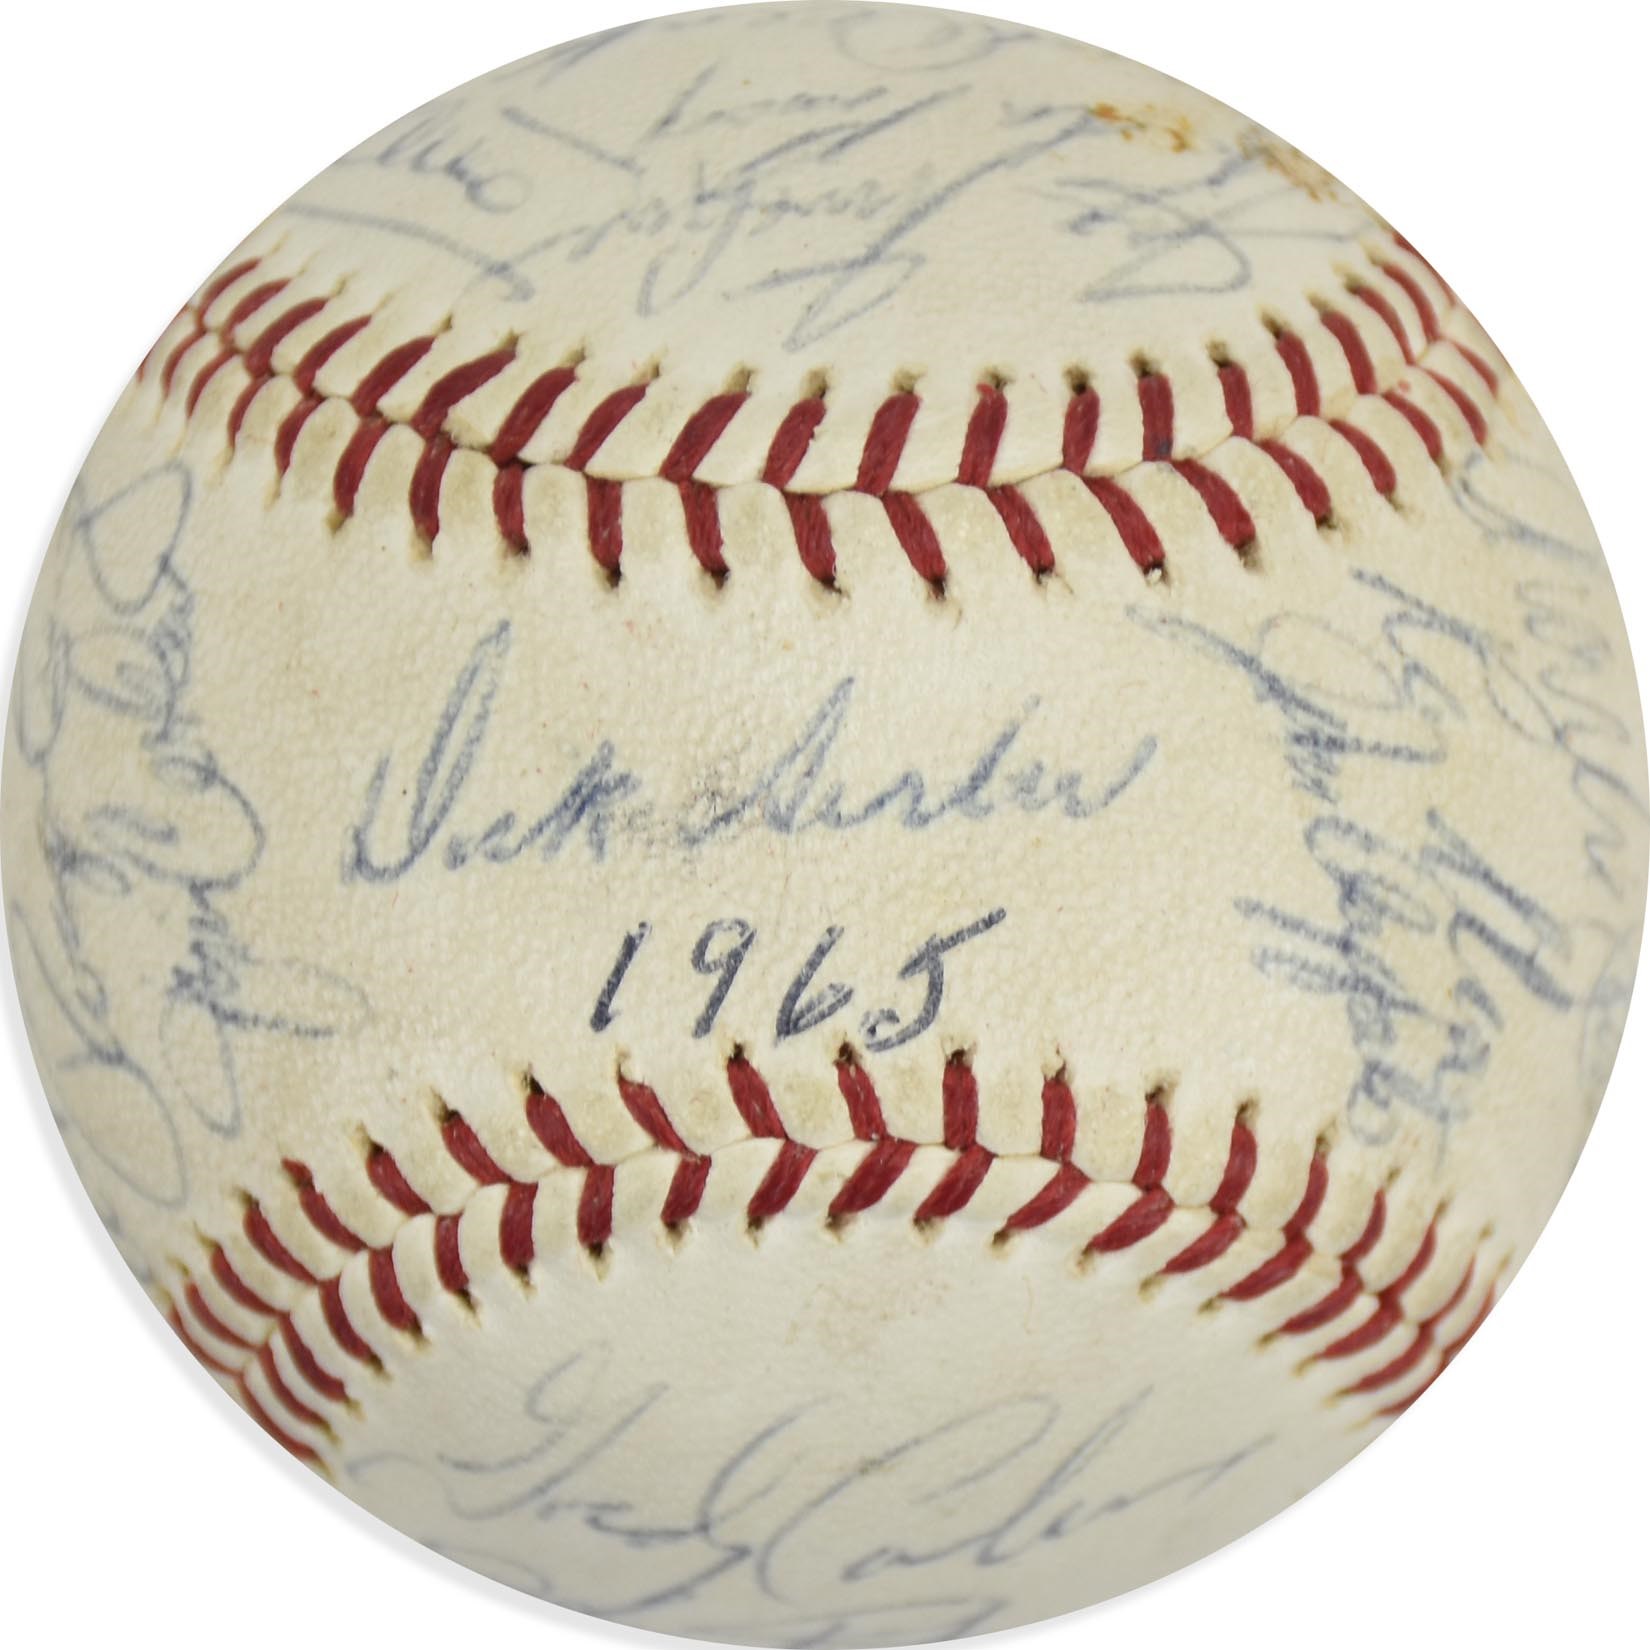 Baseball Autographs - 1965 Cincinnati Reds Team-Signed Baseball with Perez and Robinson (PSA)